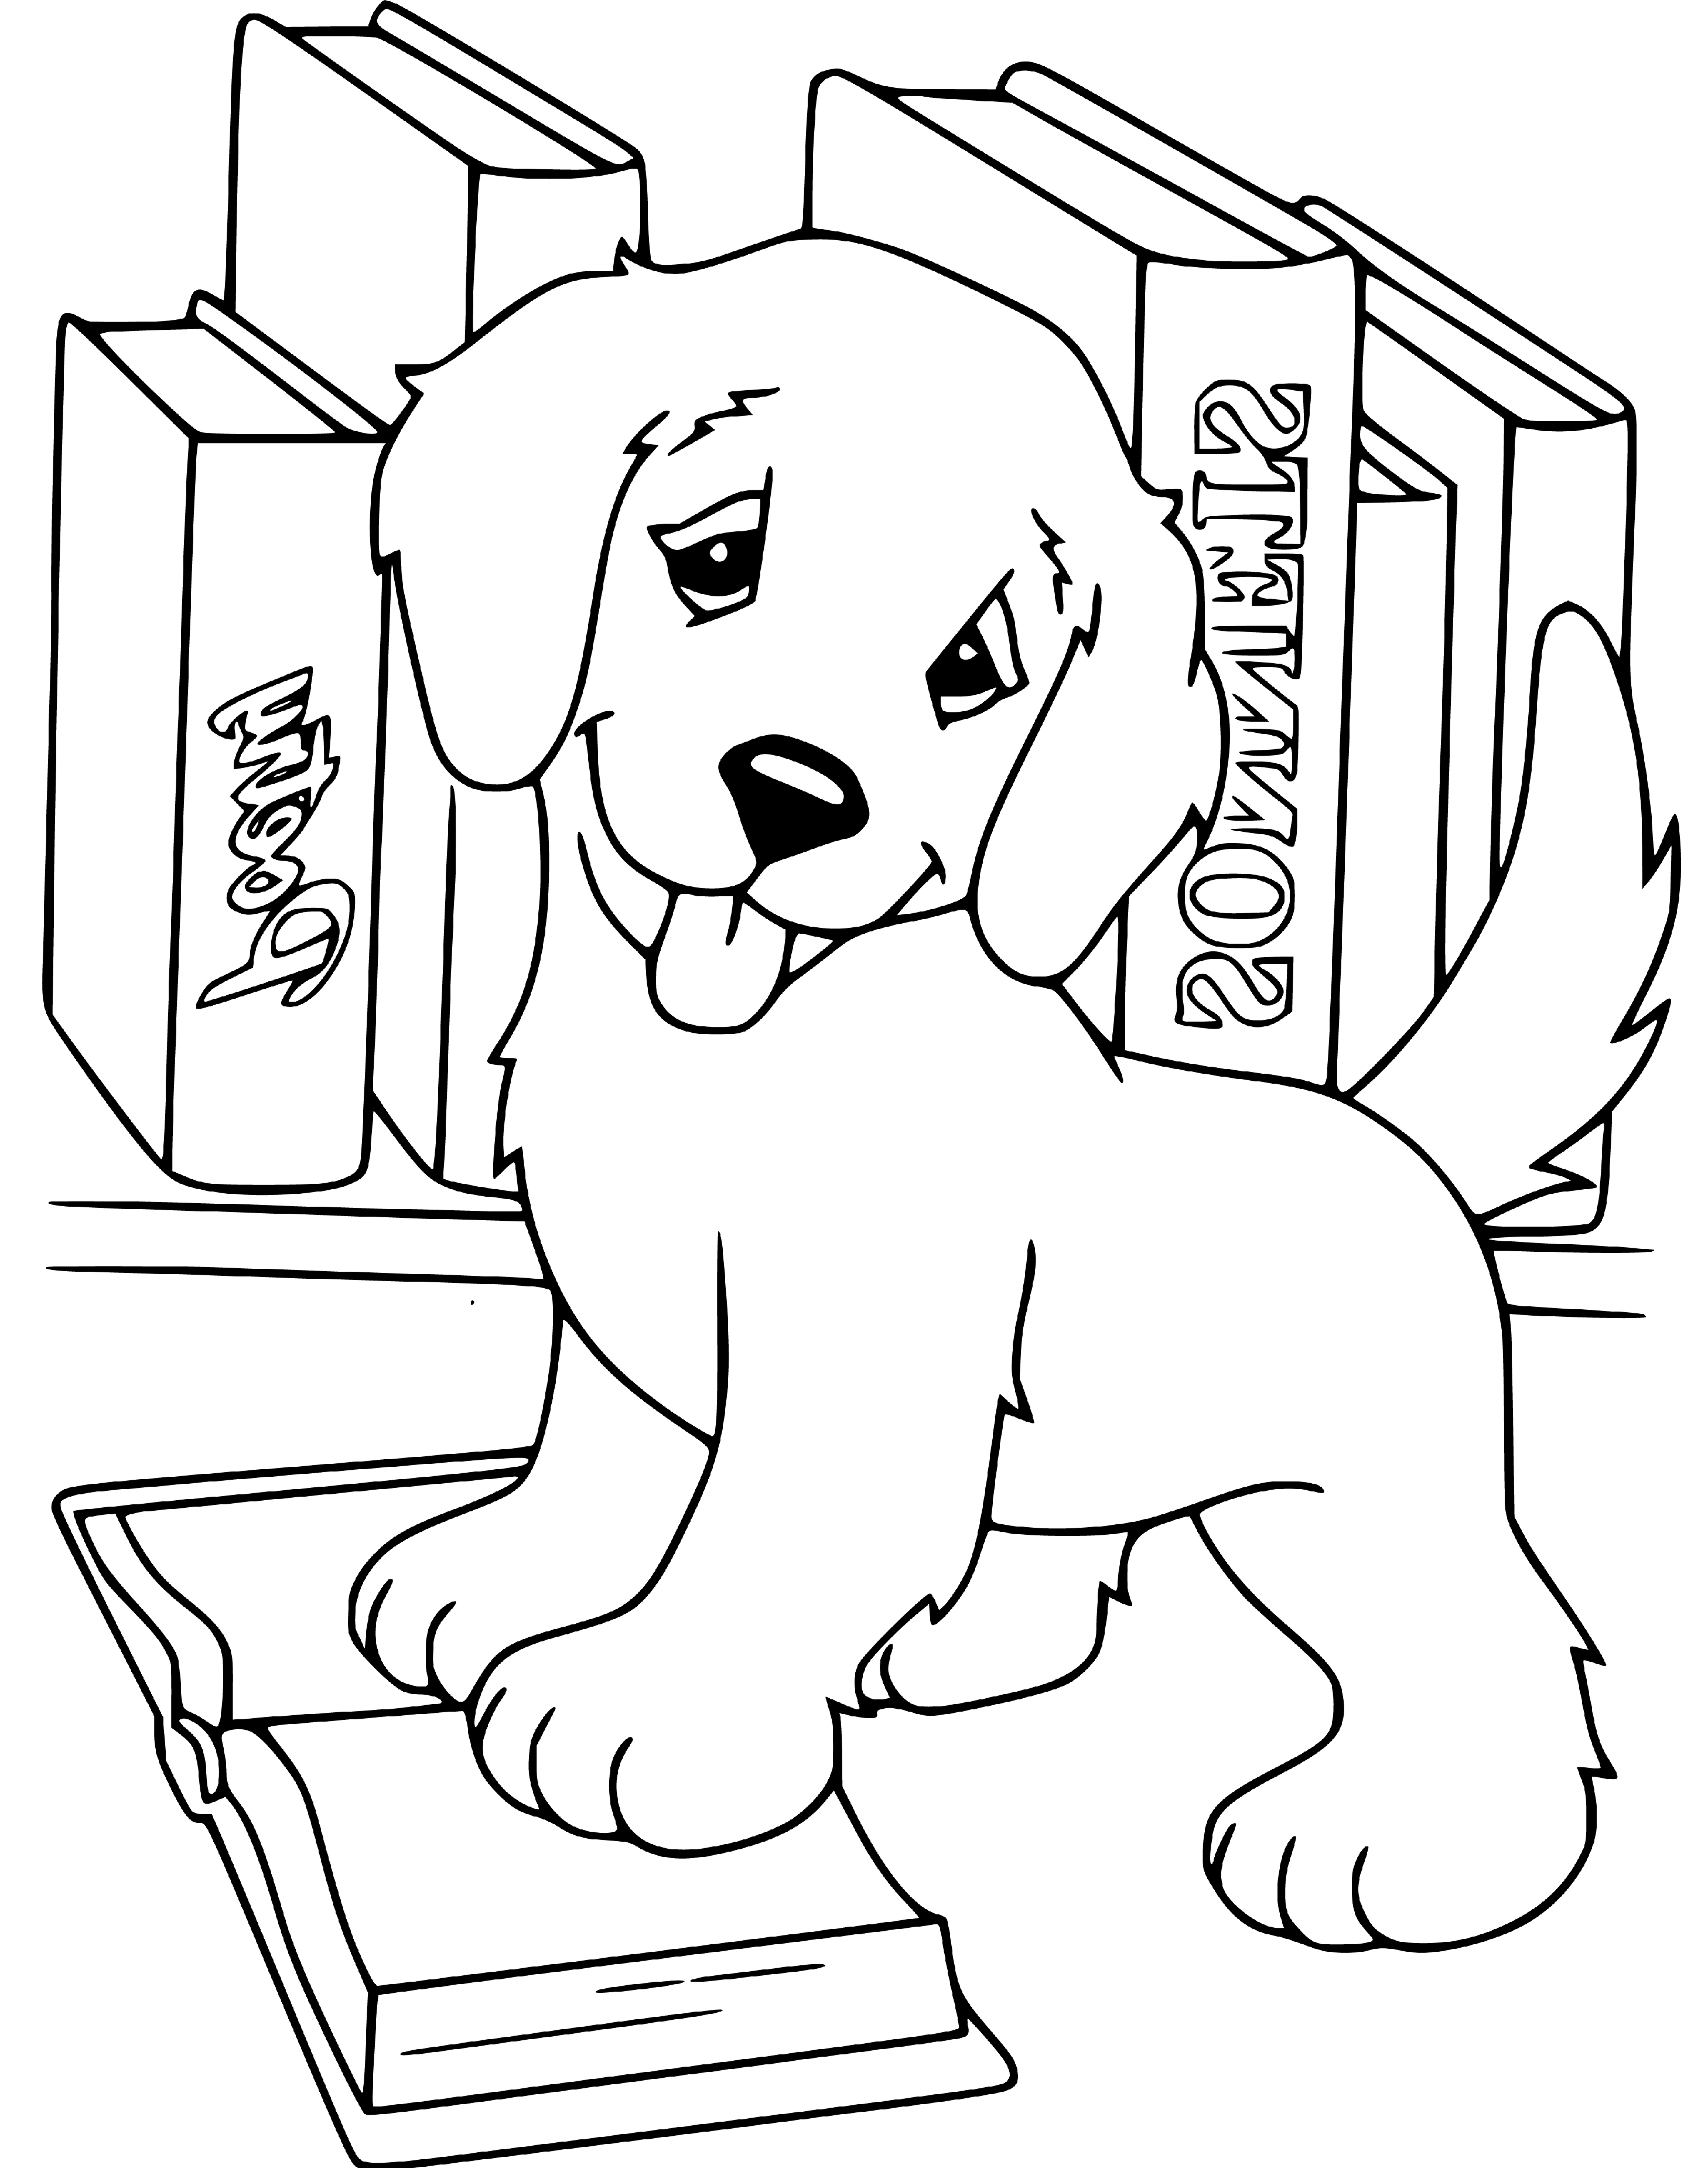 Puppy reading book Coloring page - SheetalColor.com